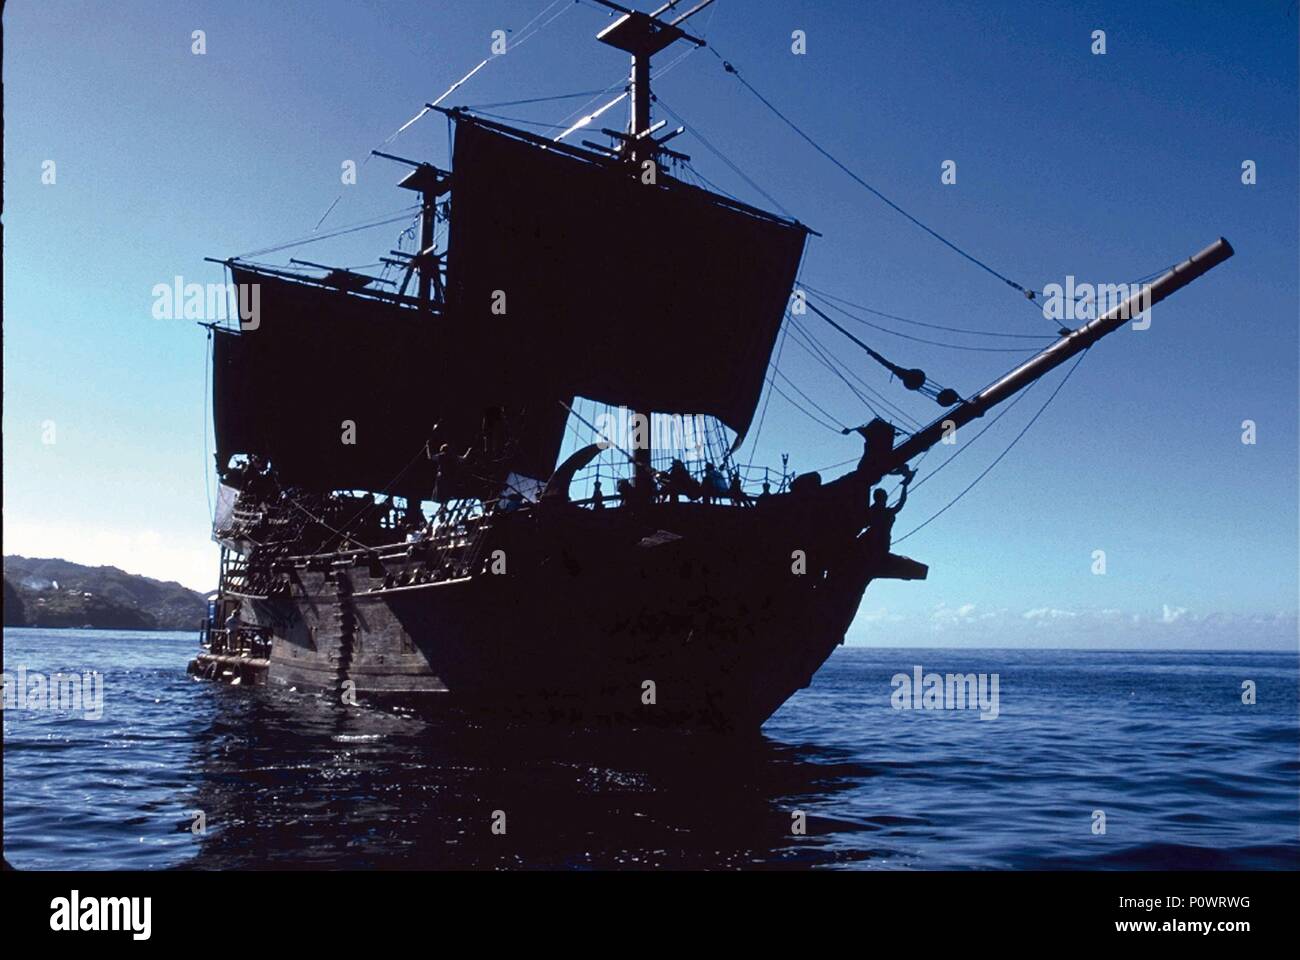 Piratas caribe perla fotografías e imágenes de alta resolución - Alamy